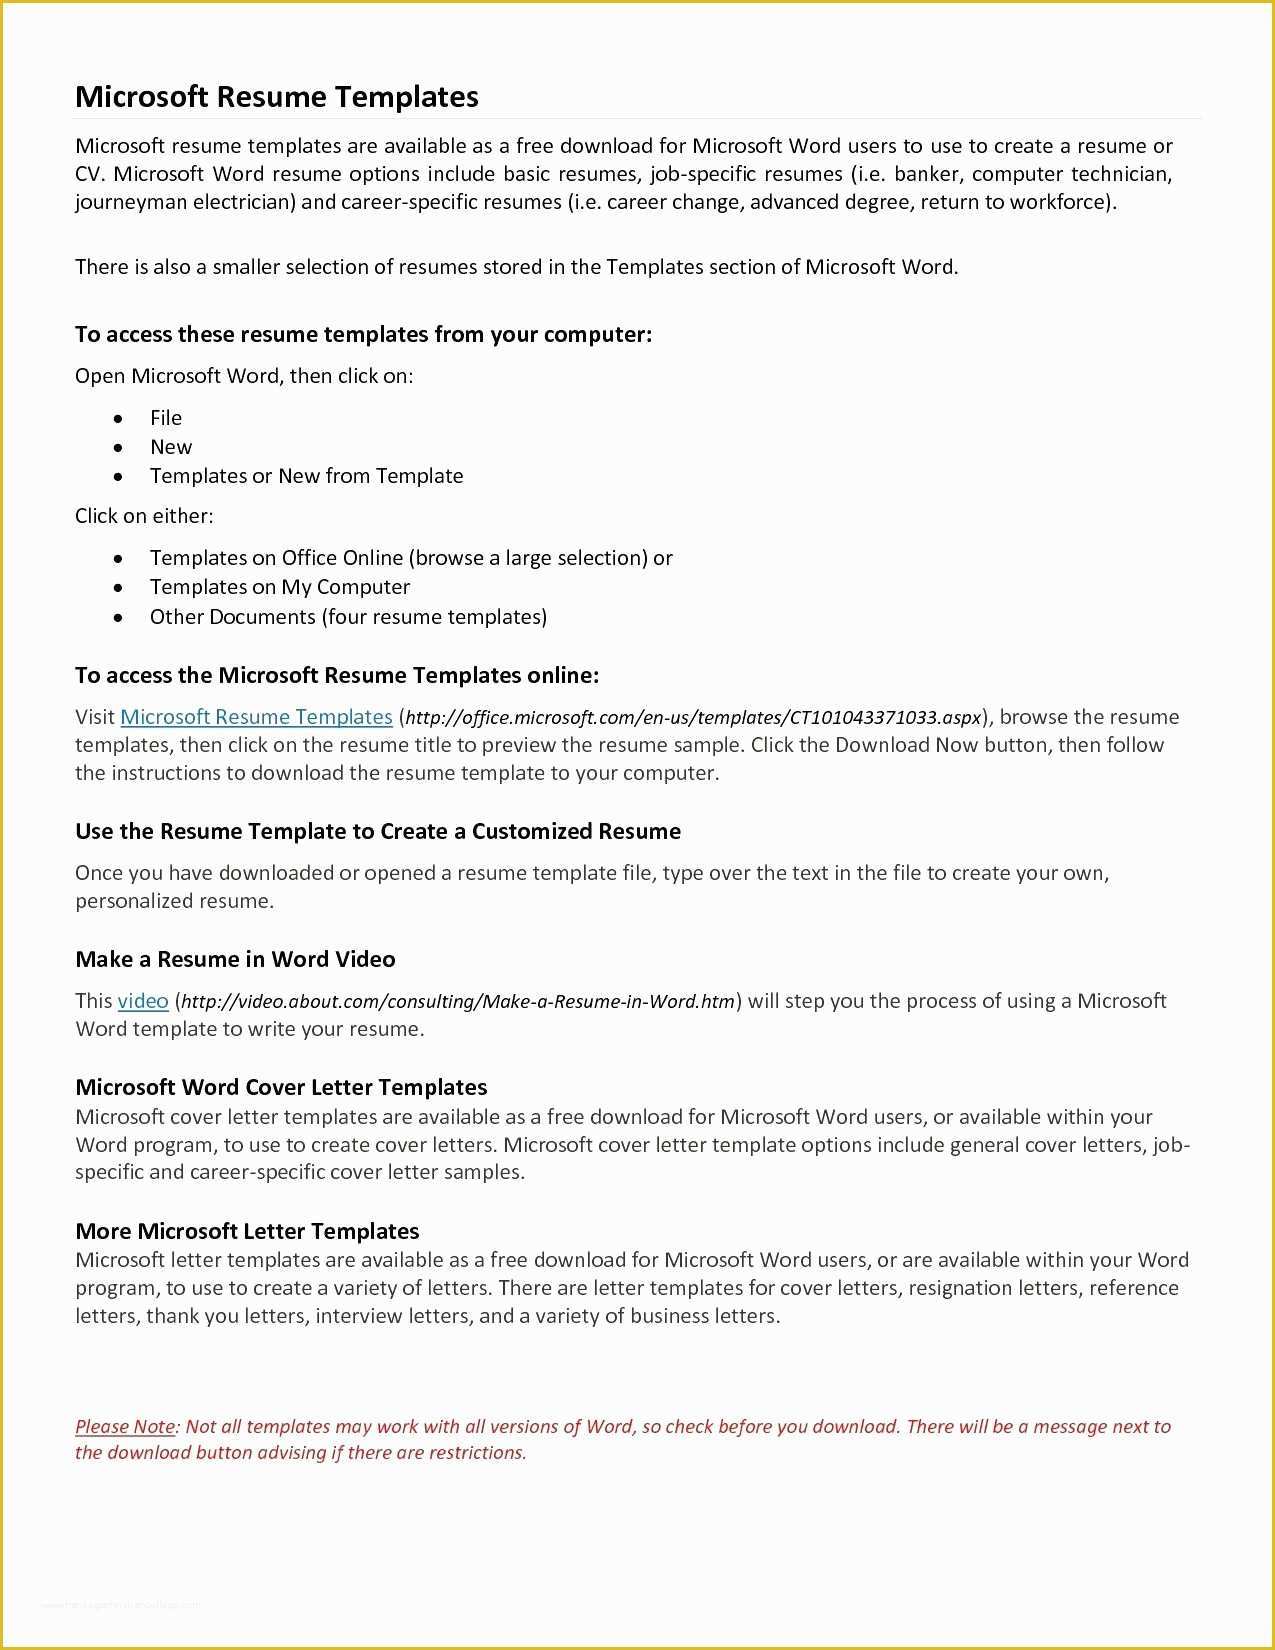 Microsoft Works Free Resume Templates Of Microsoft Works Free Download 2019 – New Resume 2019